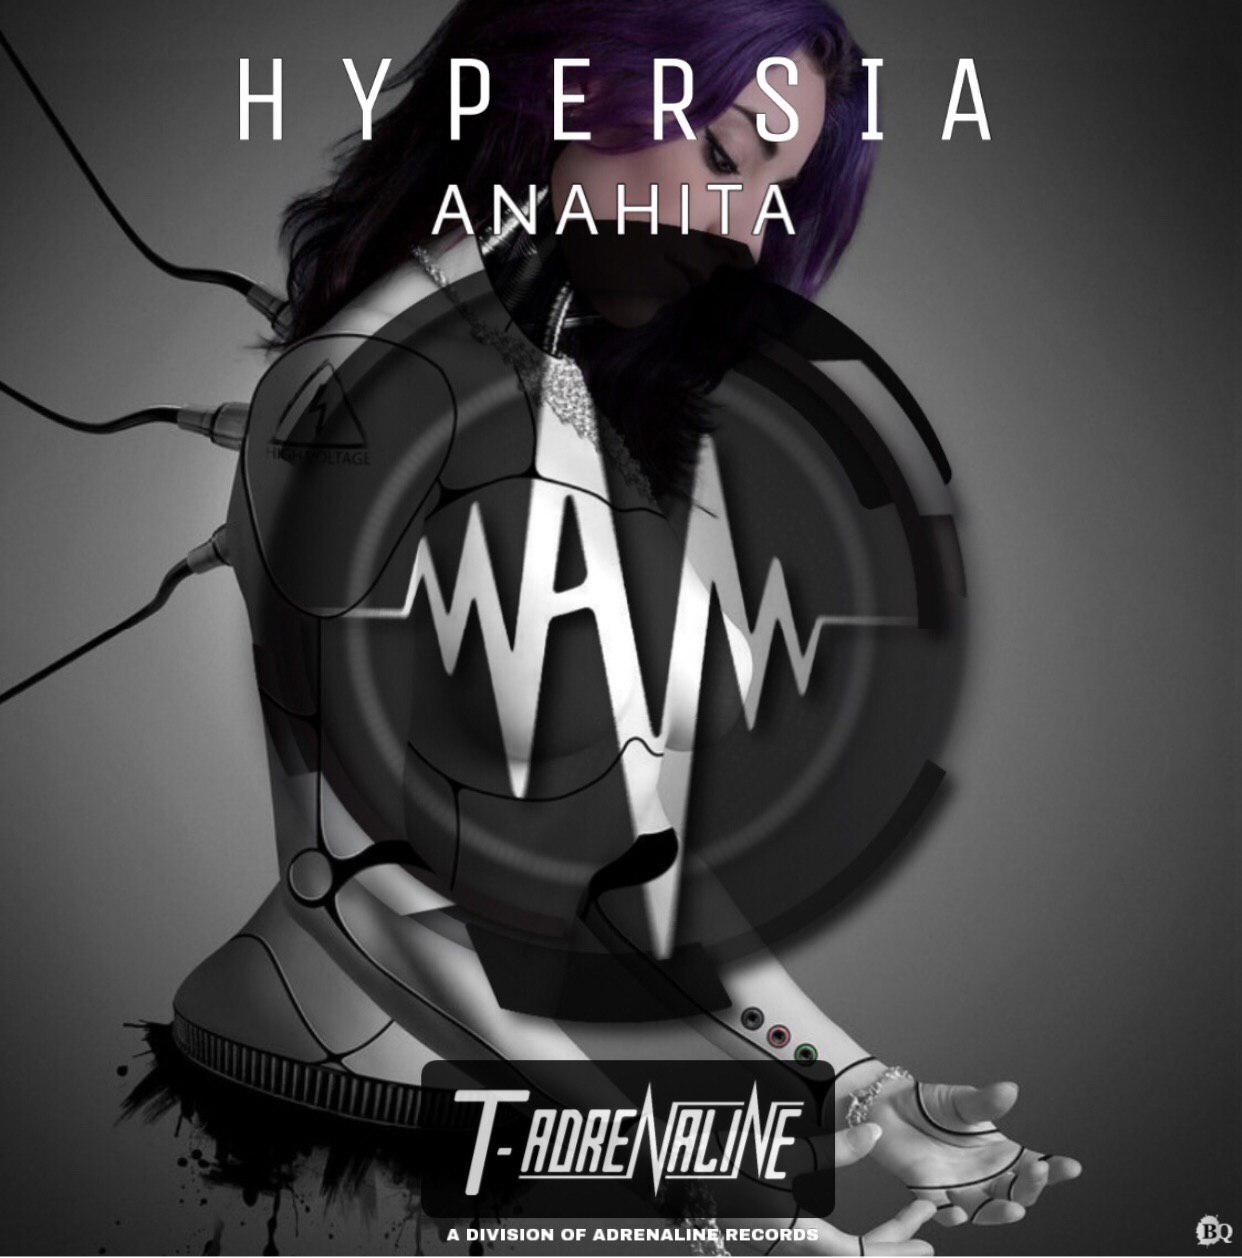 Hypersia-Anahita